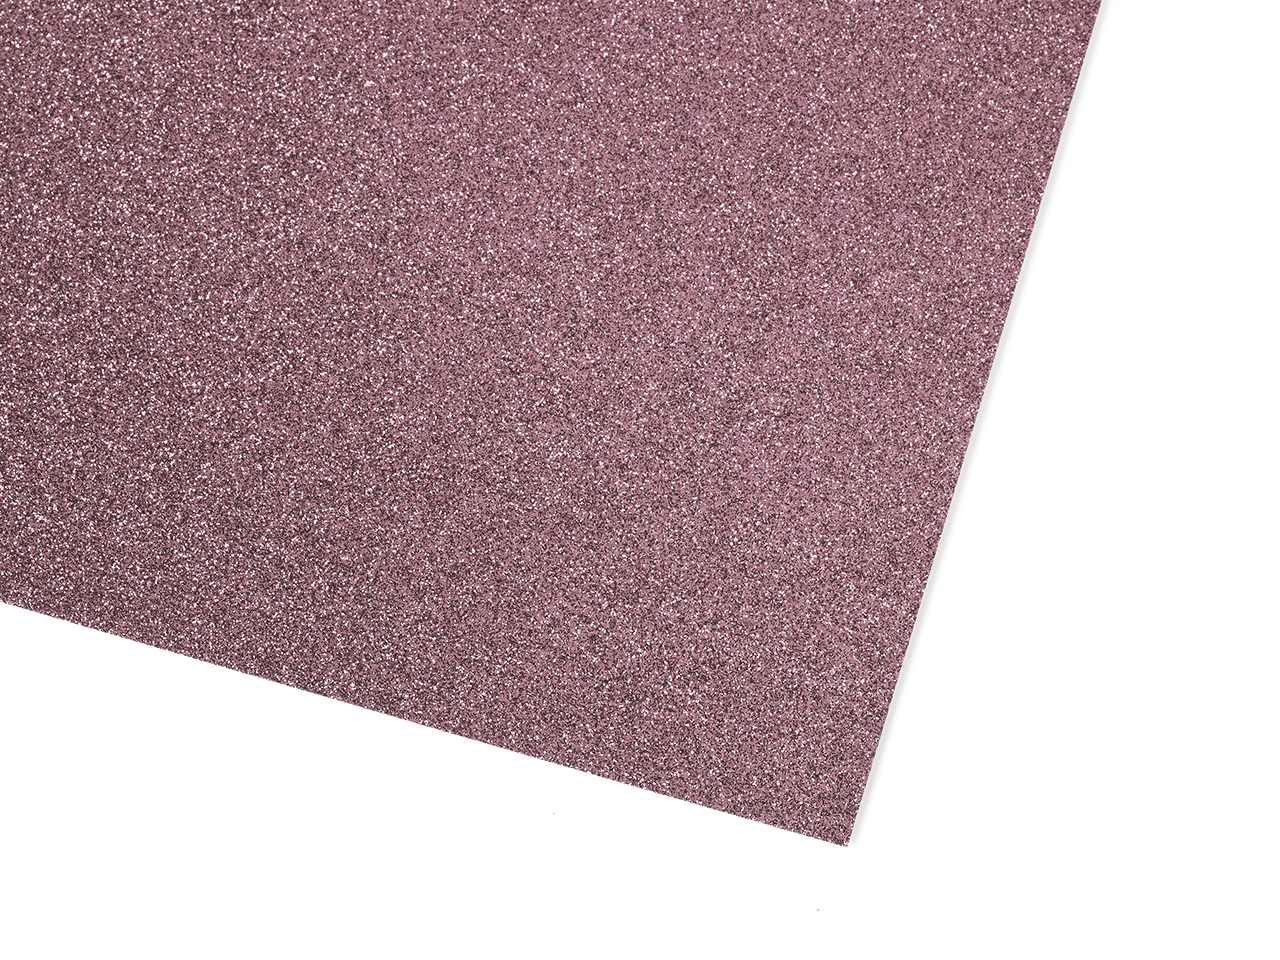 15 Pack Self Adhesive Glitter Foam Paper Sheets